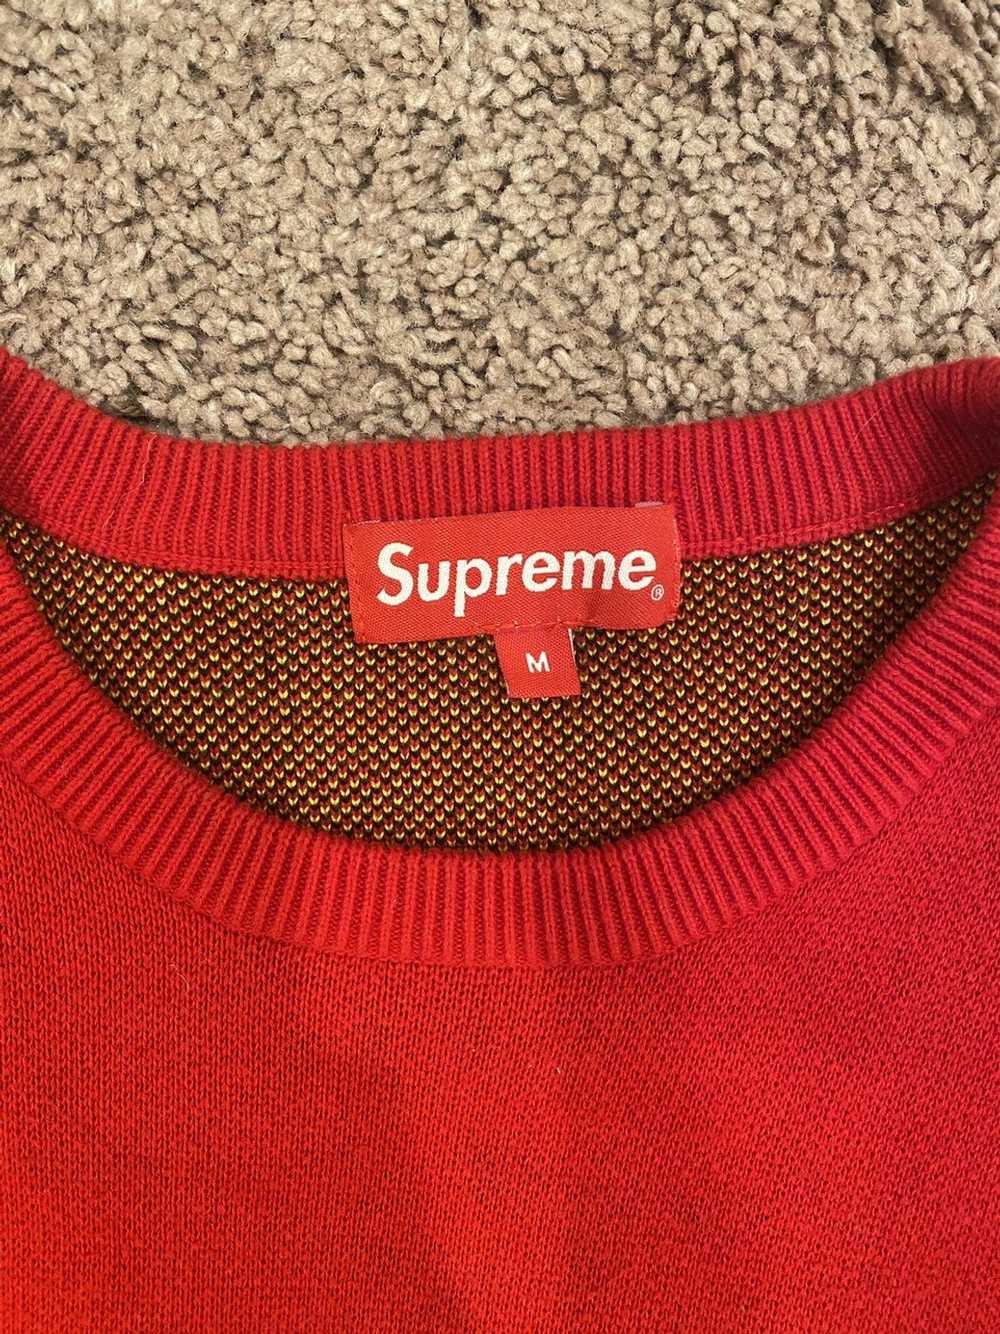 Supreme hoodie red logo - Gem